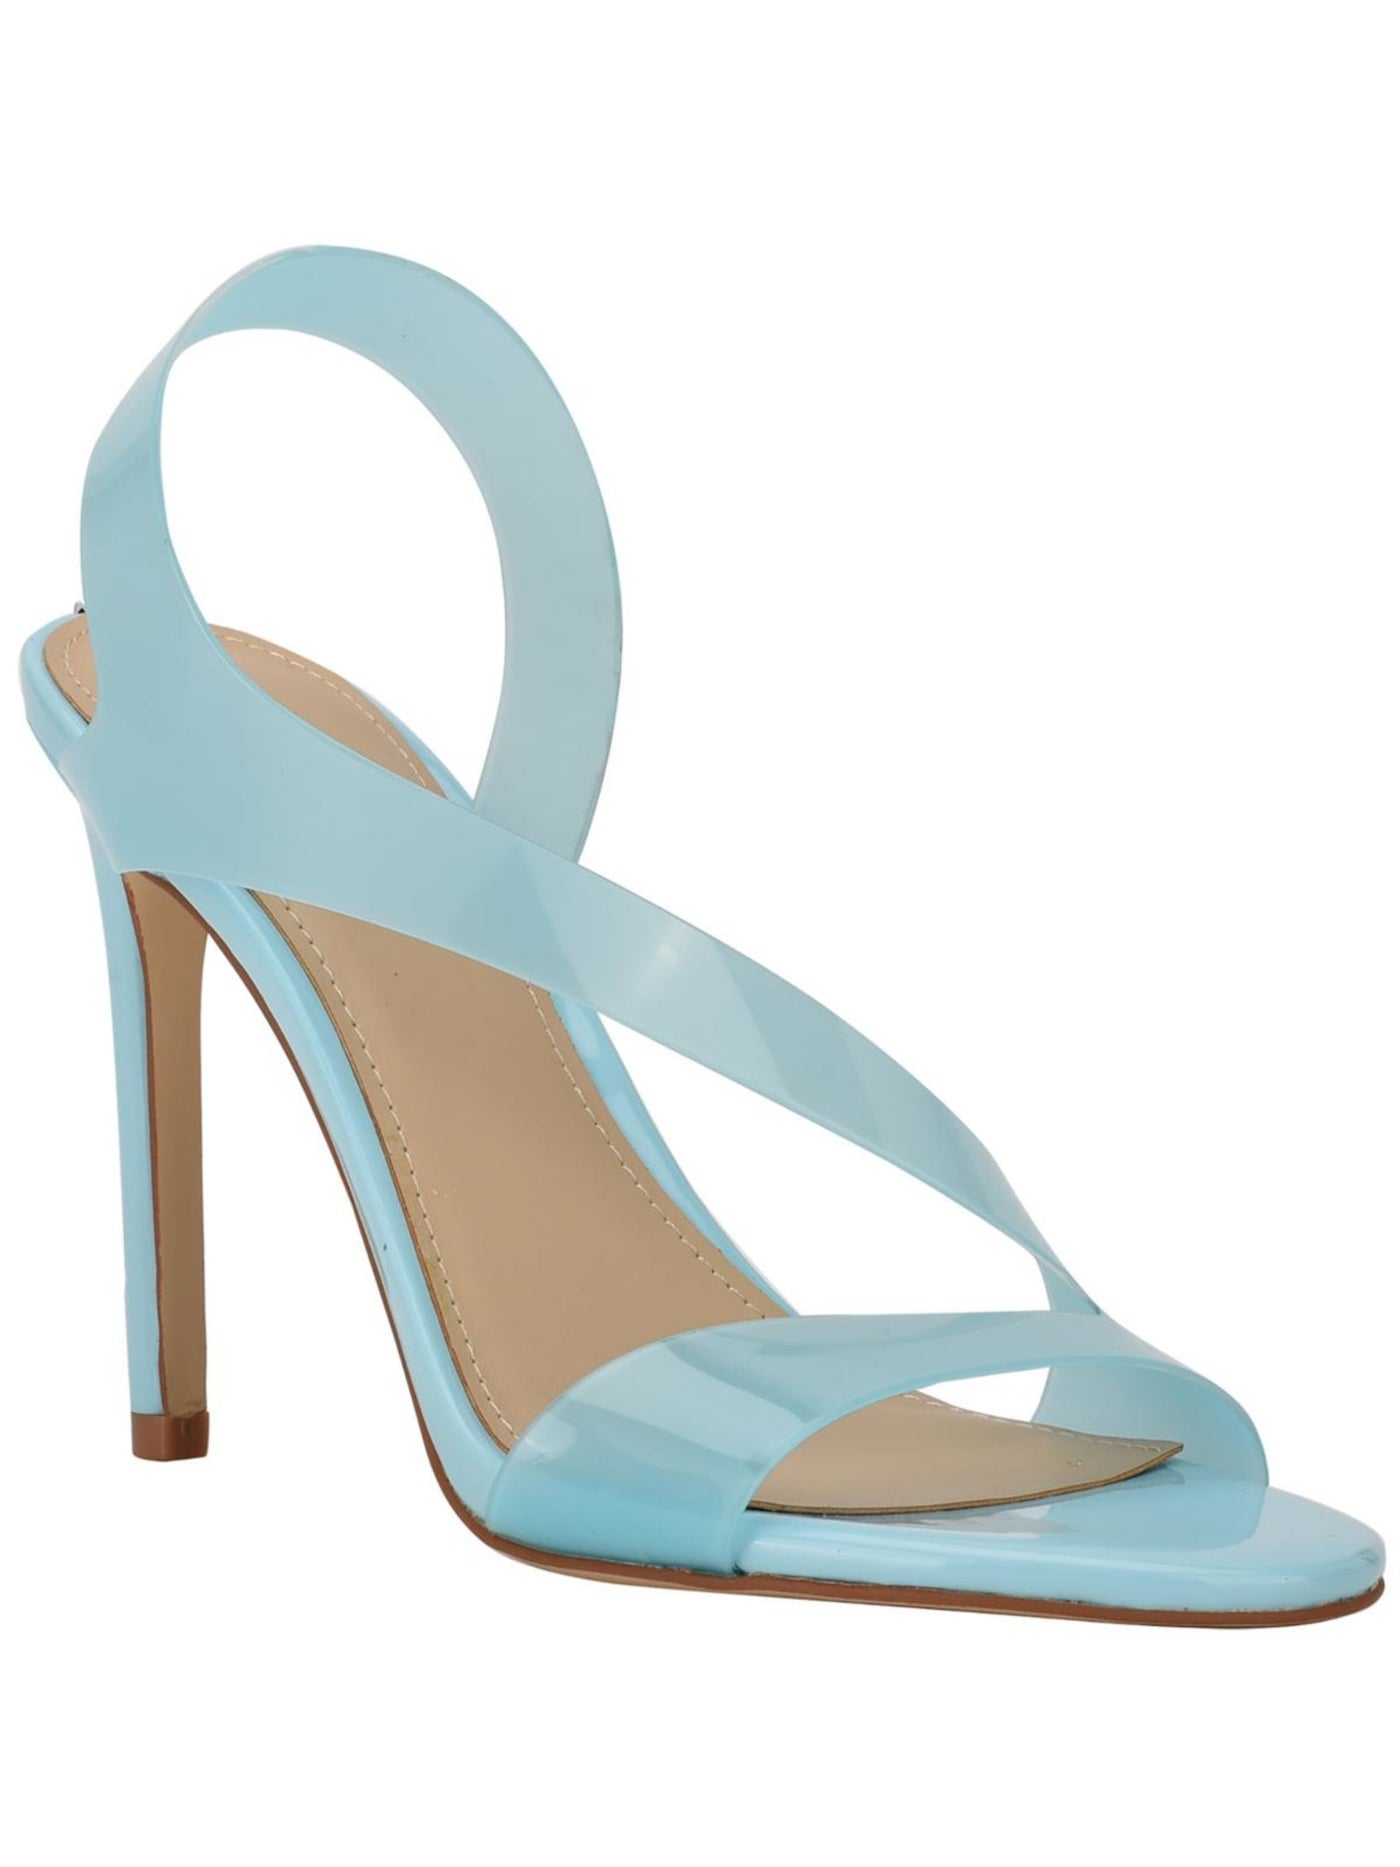 GUESS Womens Light Blue Translucent Asymmetrical Padded Ferry Almond Toe Stiletto Slip On Slingback Sandal 8.5 M